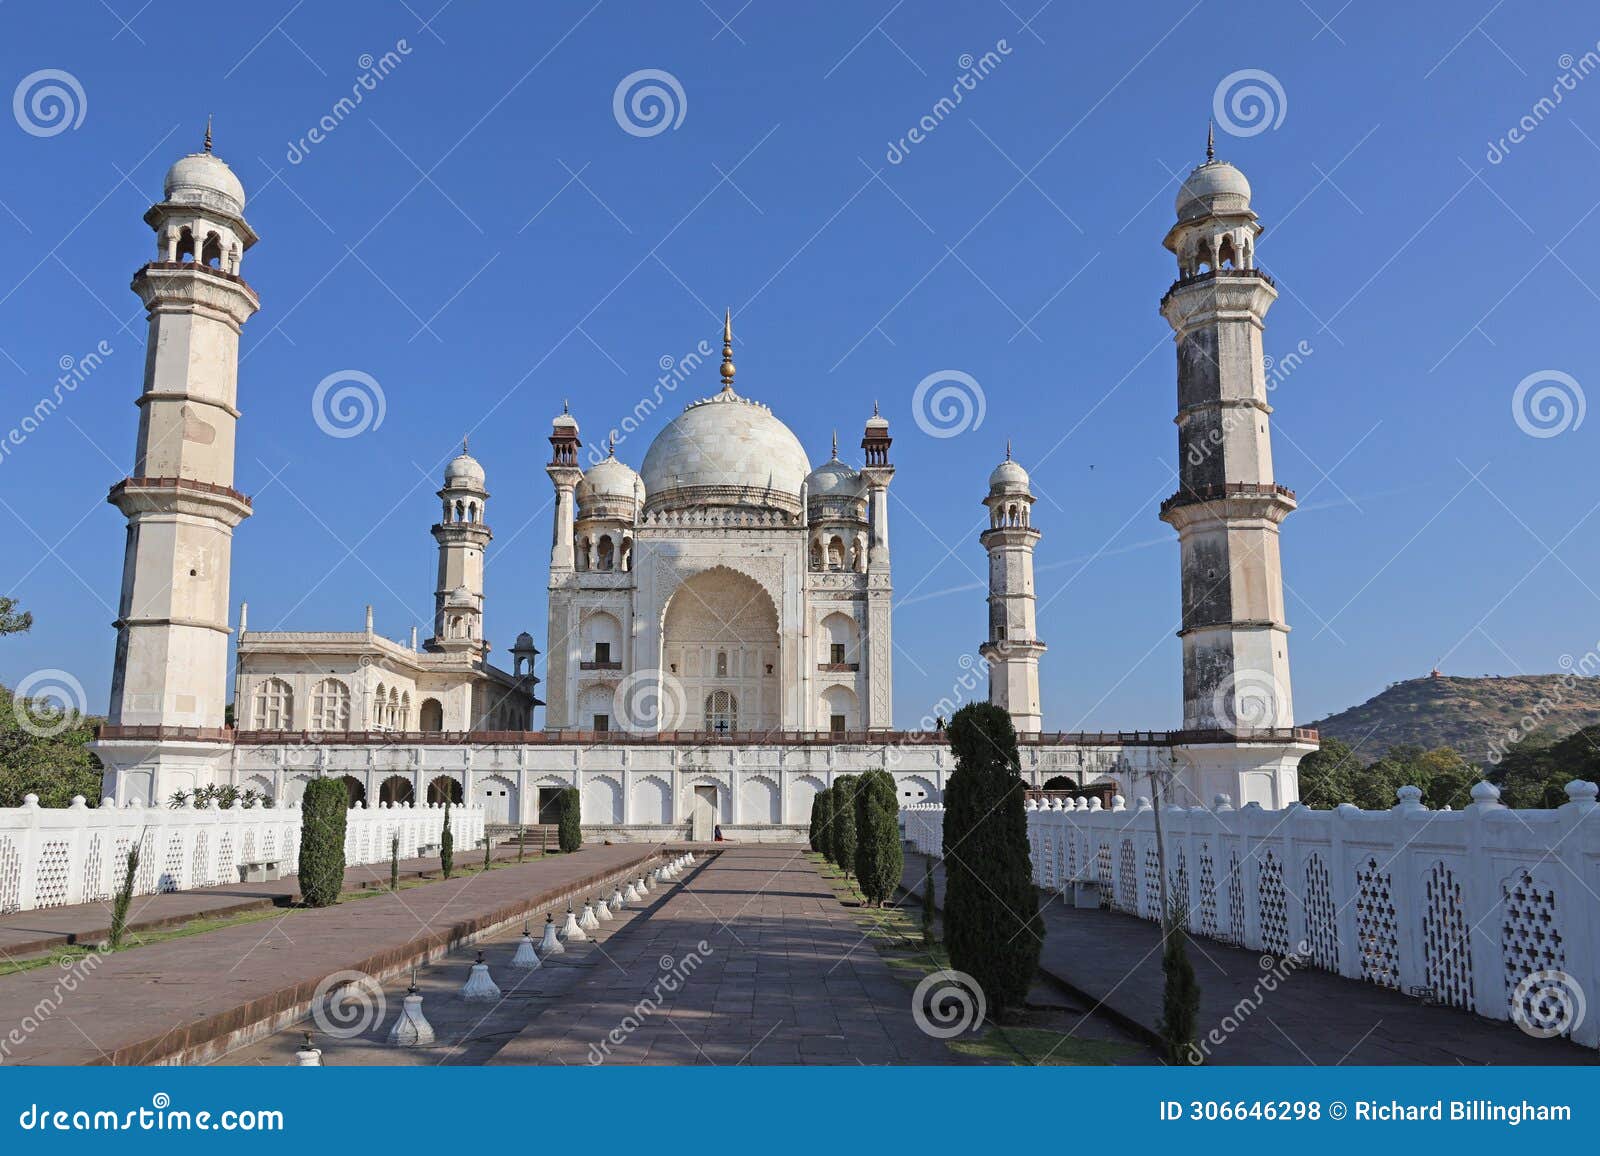 bini-ka maqbaba mausoleum, aurangabad, maharashtra, india